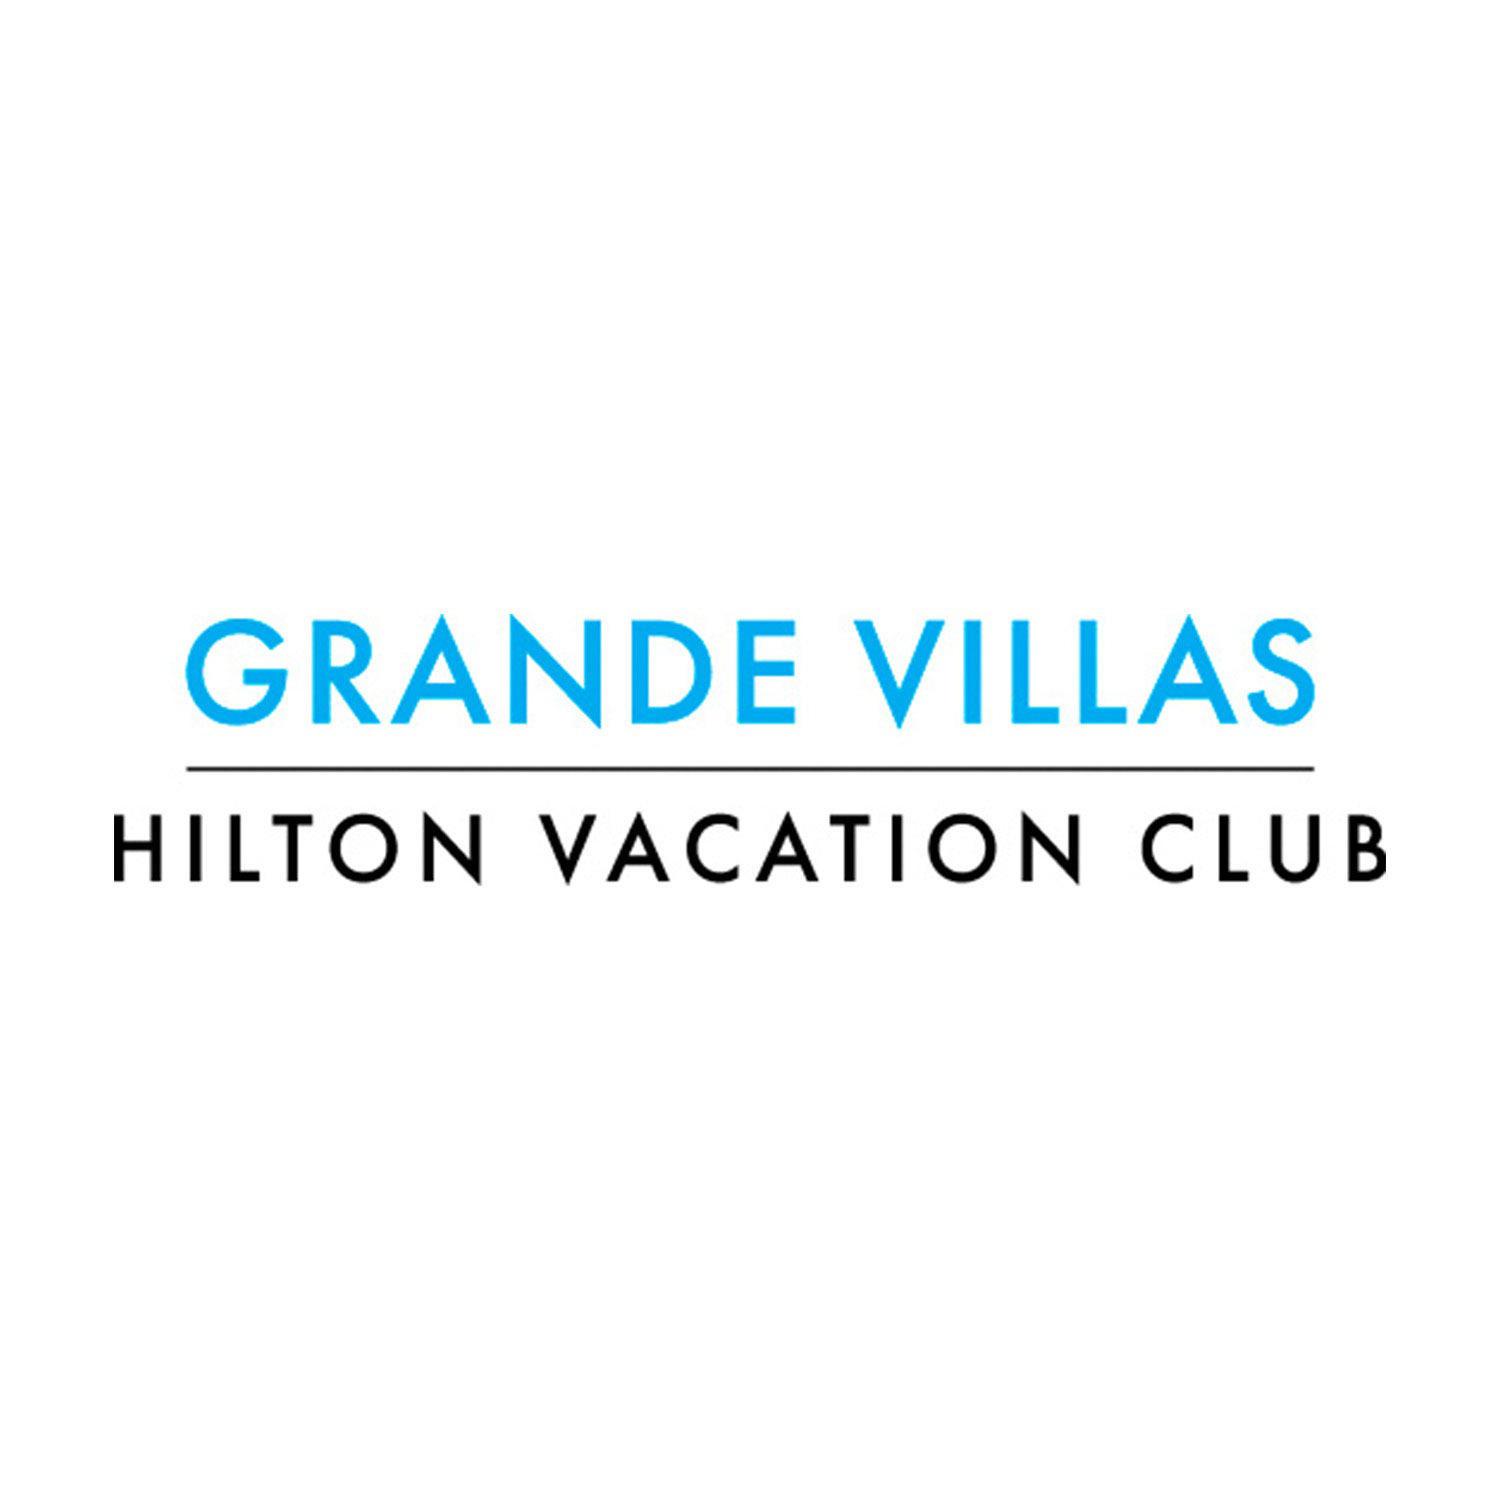 Hilton Vacation Club Grande Villas Orlando - Orlando, FL 32836 - (407)238-2300 | ShowMeLocal.com